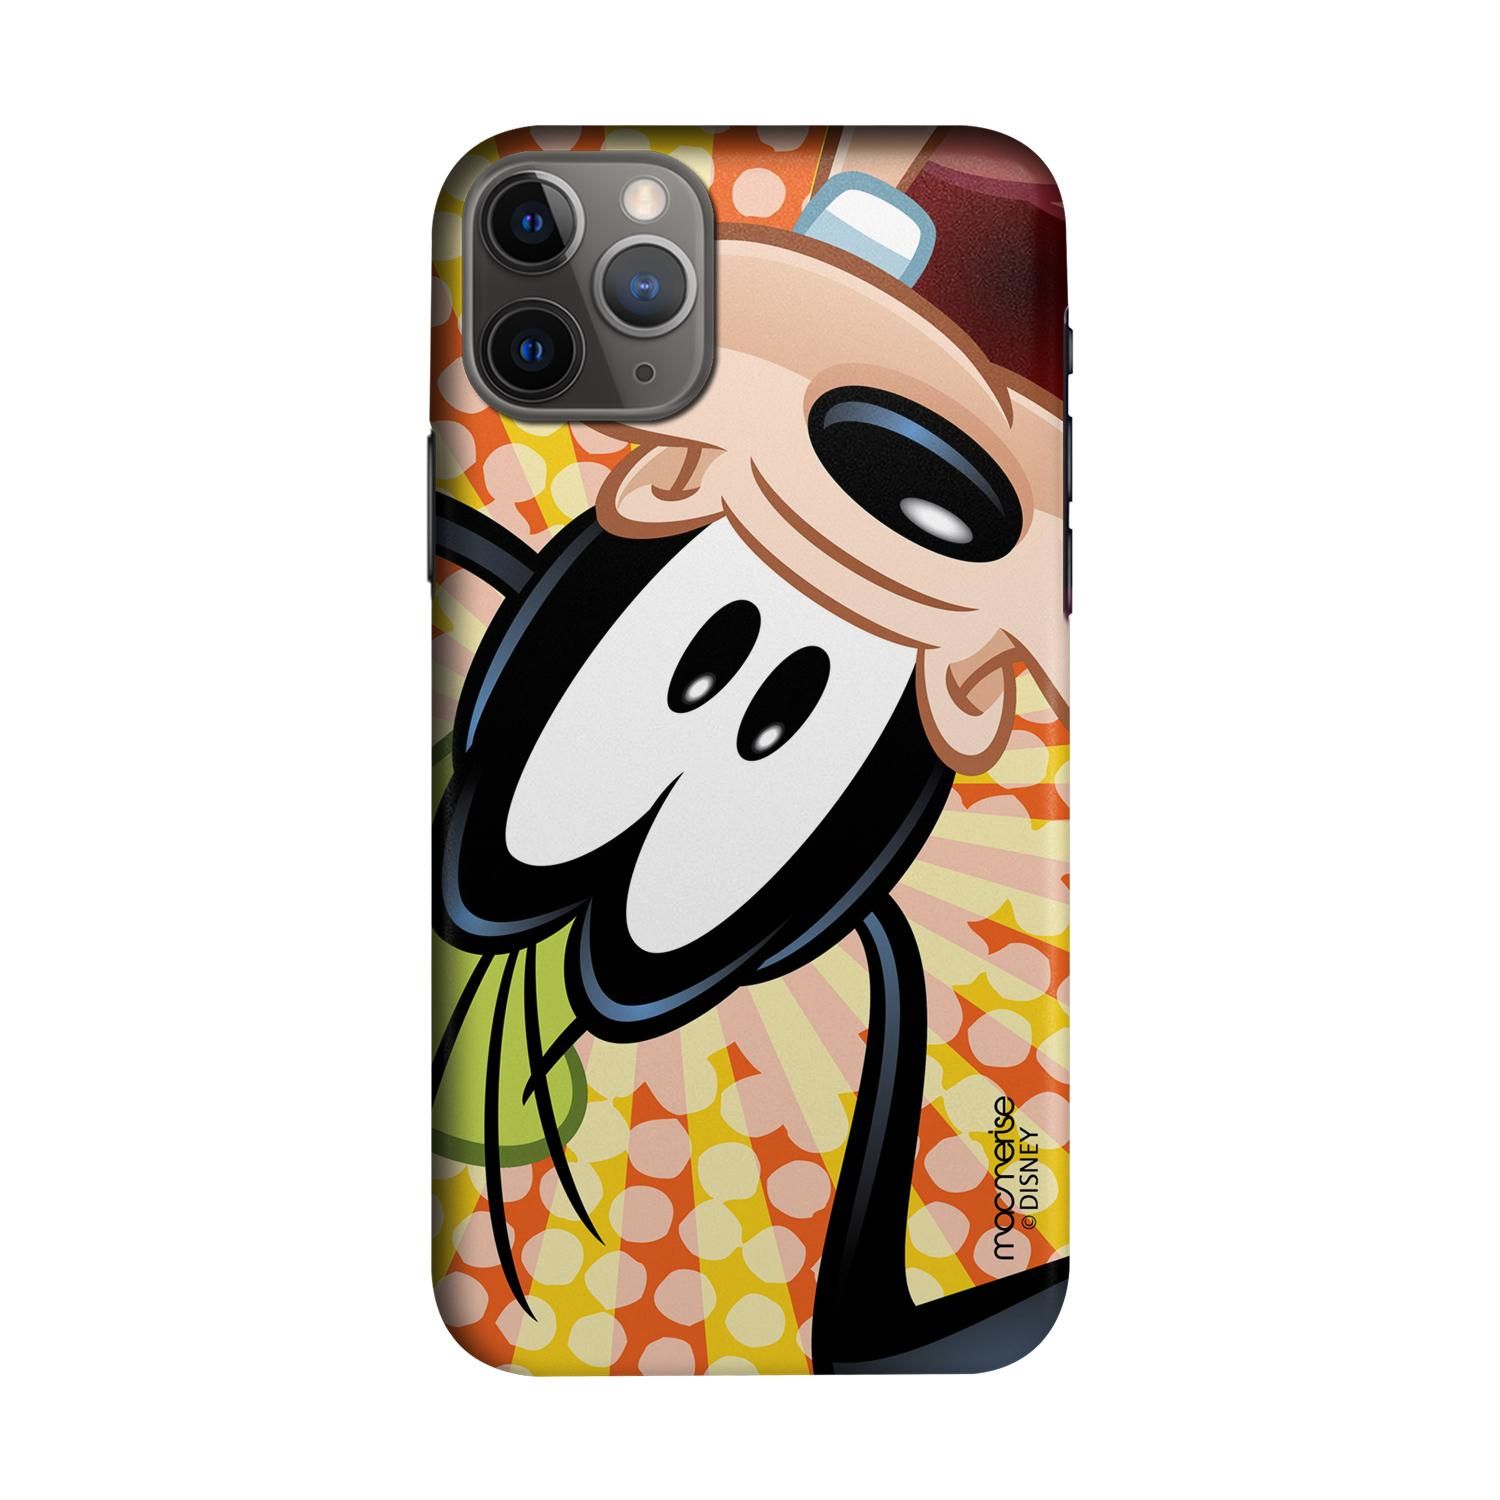 Buy Goofy Upside Down - Sleek Phone Case for iPhone 11 Pro Online